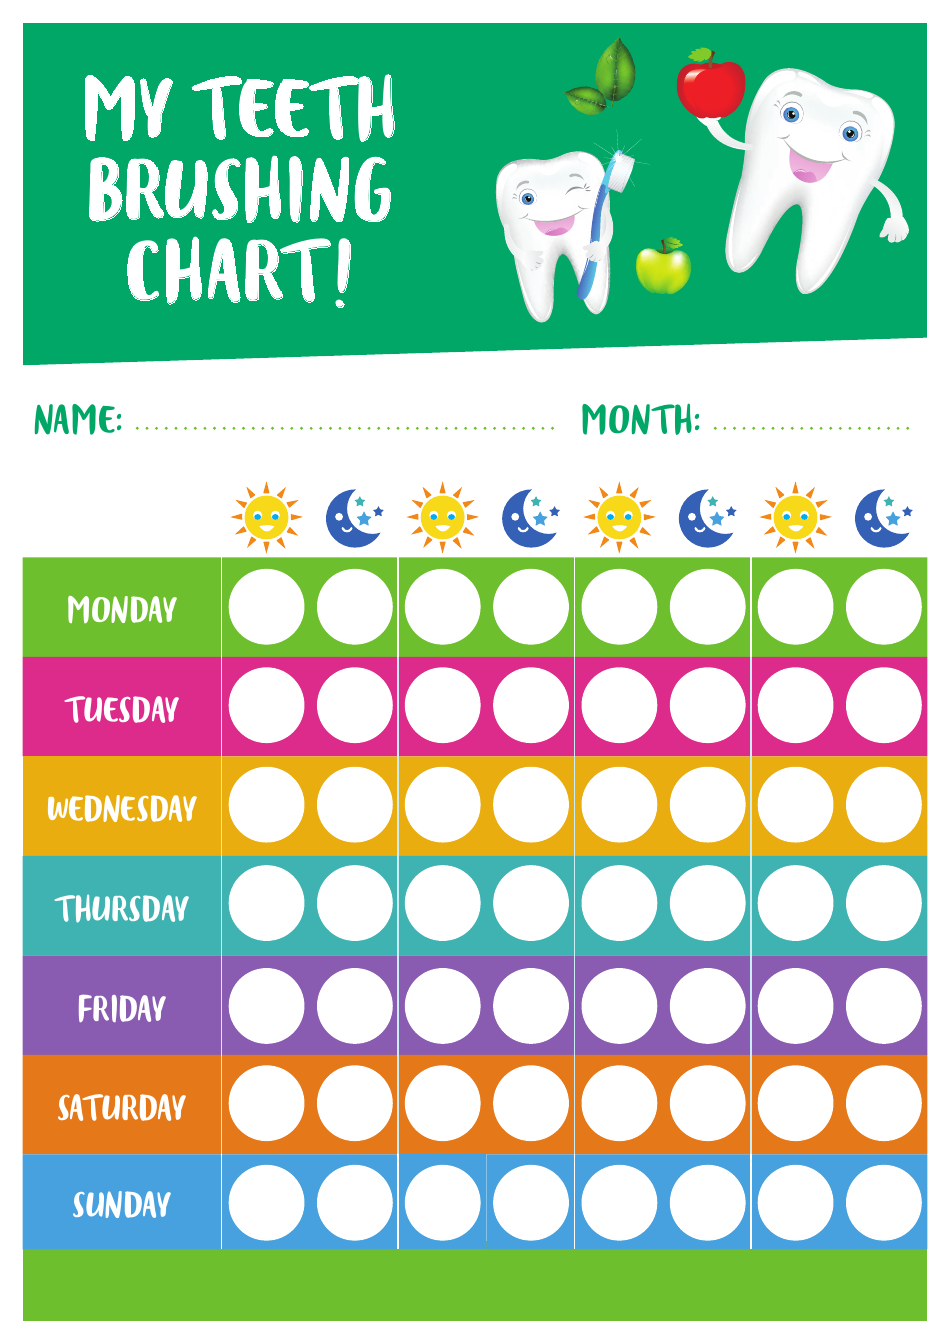 Weekly Teeth Brushing Chart - Encourage dental hygiene with our handy teeth brushing chart template